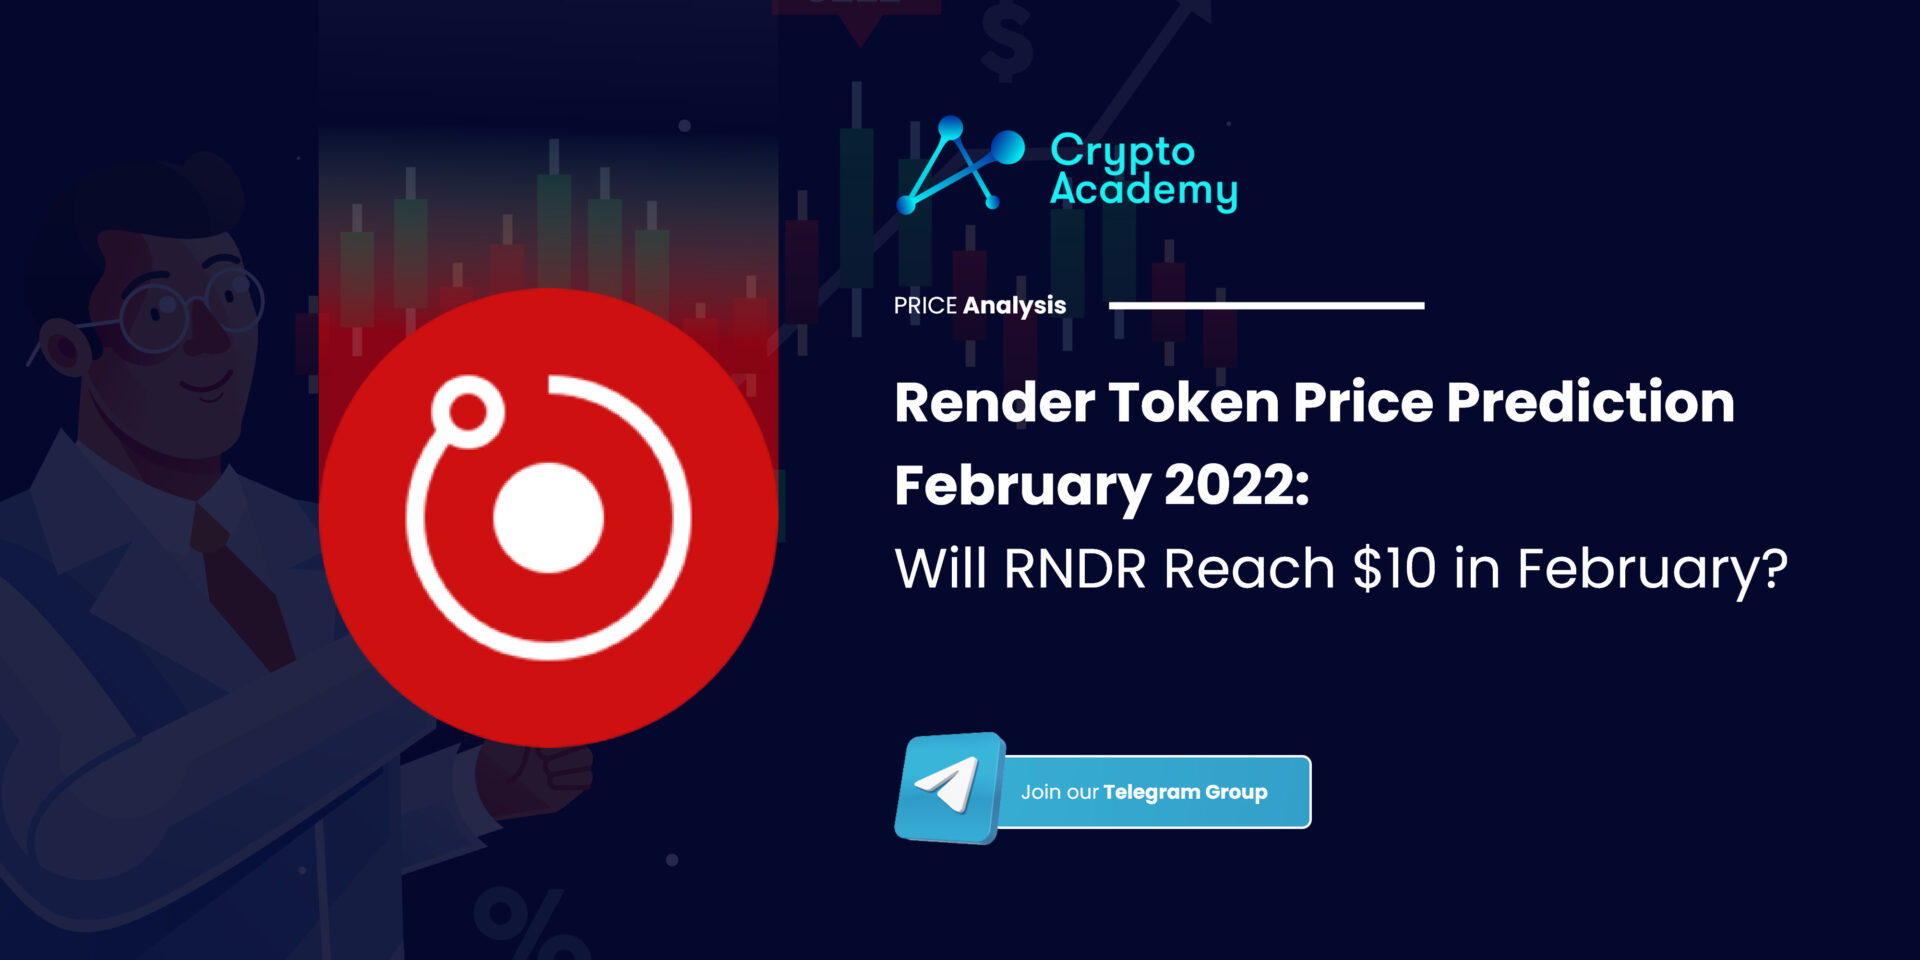 Render Token Price Prediction February 2022: Will RNDR Reach $10 in February?